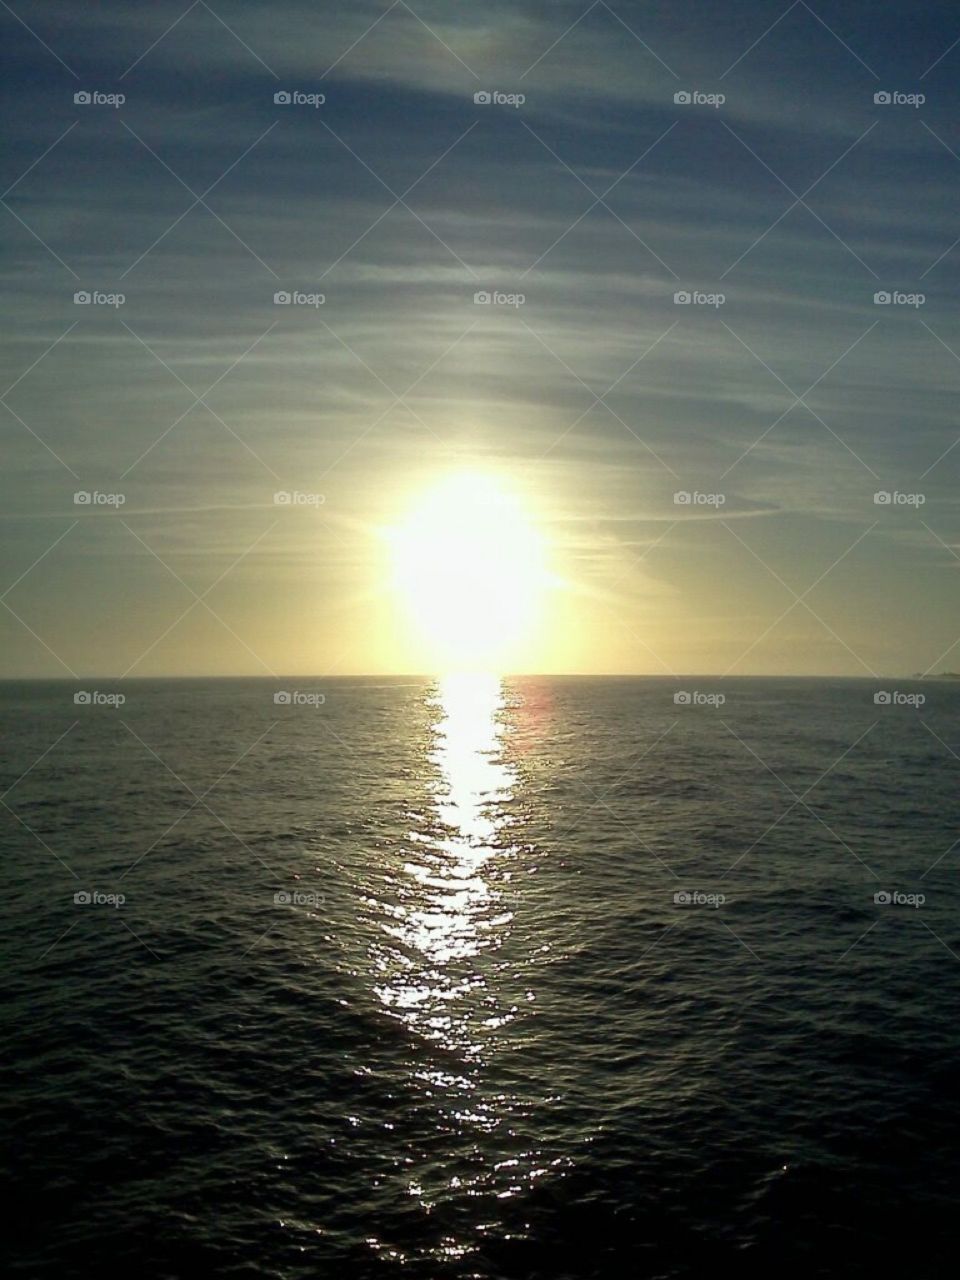 Sun going down over the ocean